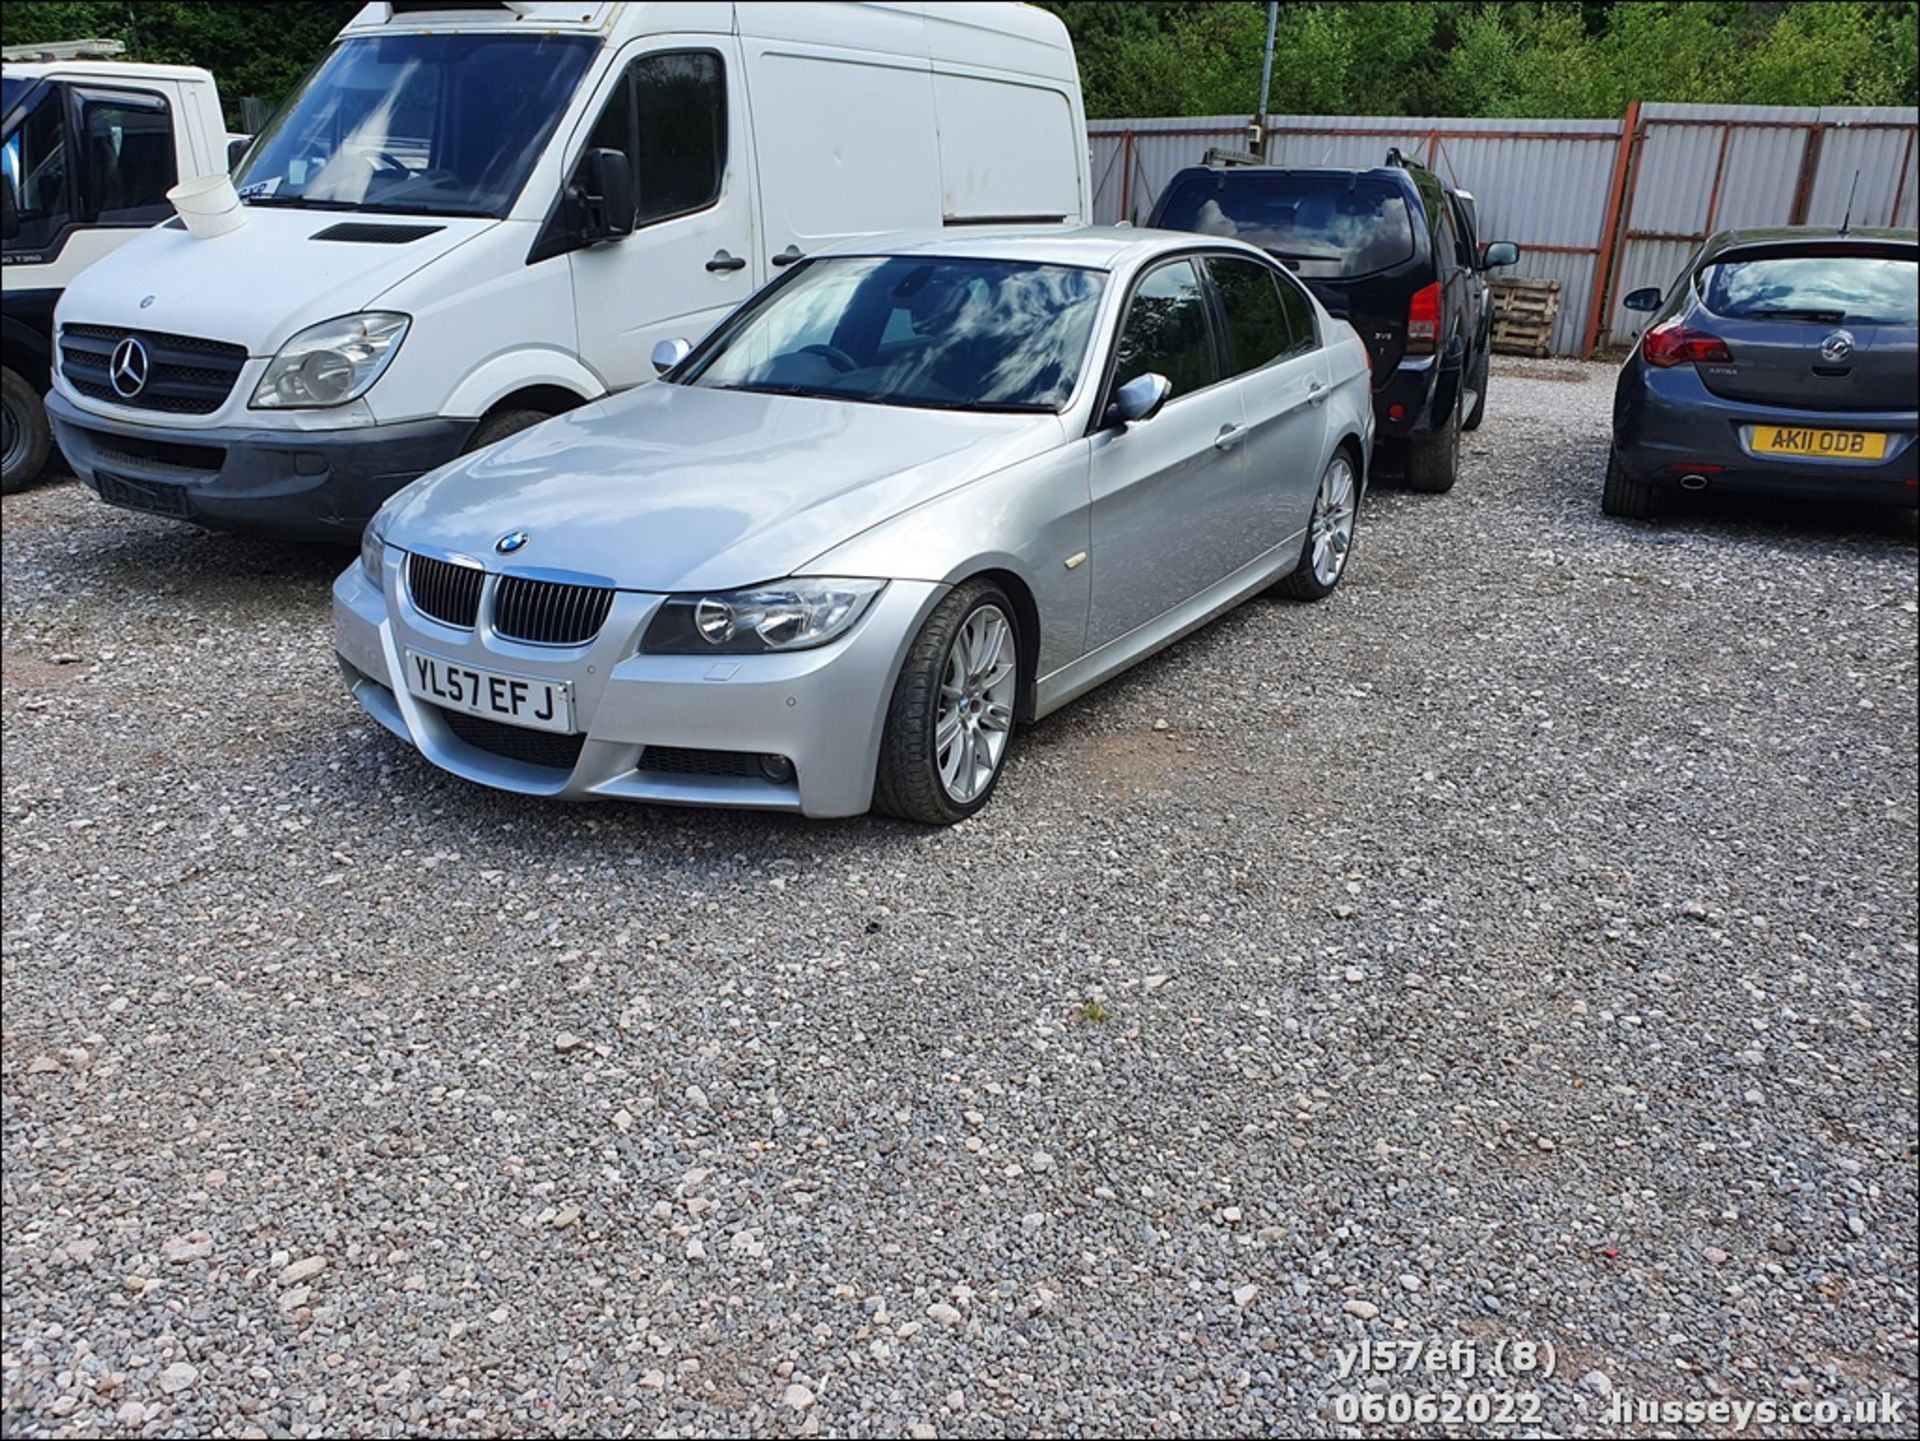 08/57 BMW 330D M SPORT AUTO - 2993cc 4dr Saloon (Silver) - Image 9 of 40